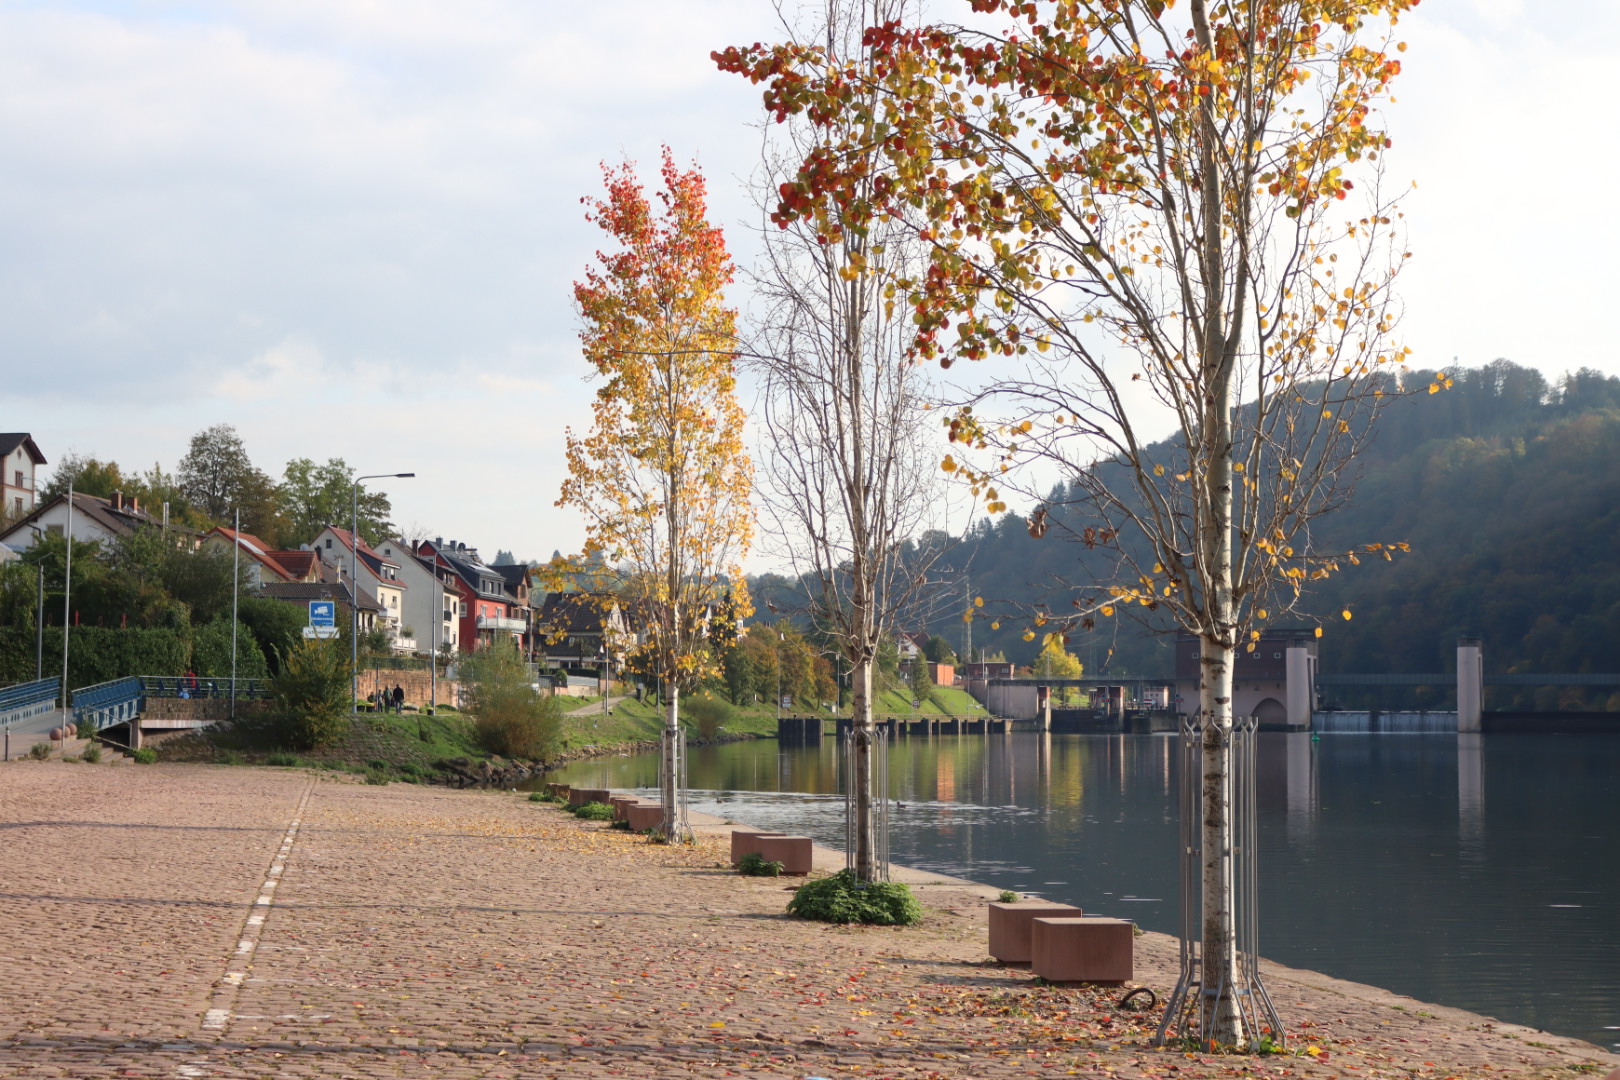 Autumn Tour 2020 Stage 3 – Großheubach to Neckargemünd